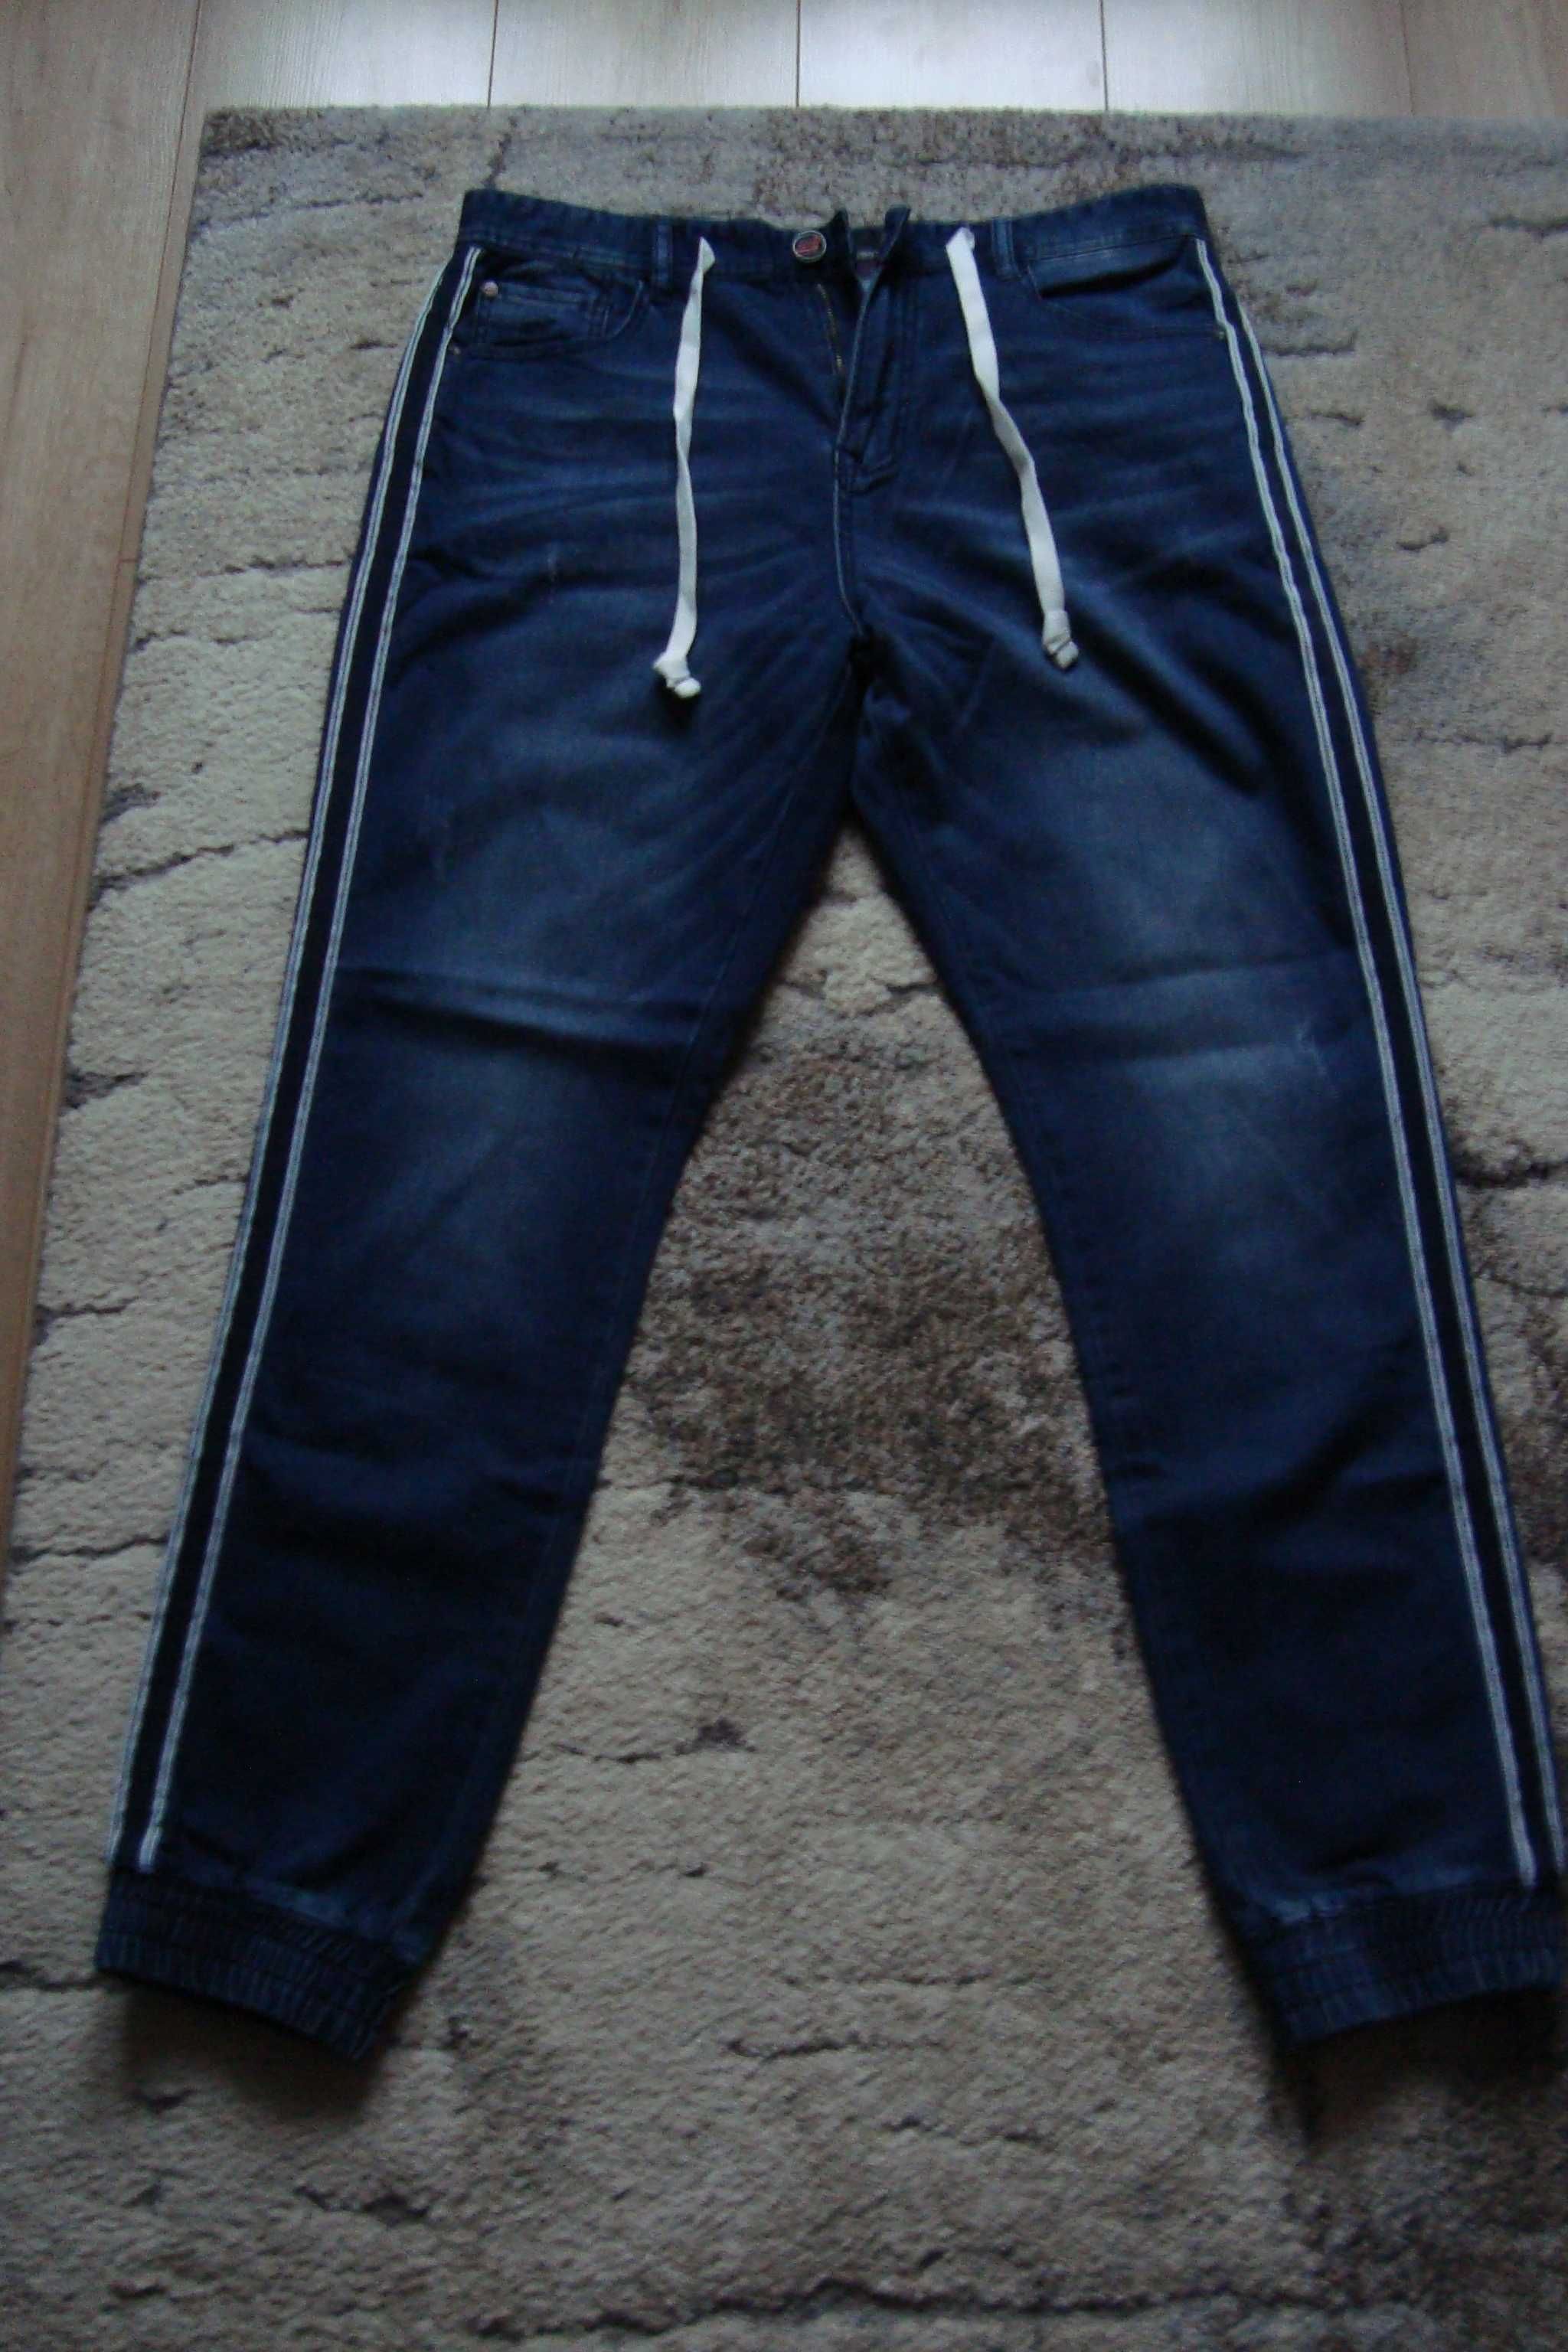 Spodnie Jeansowe DIverse L